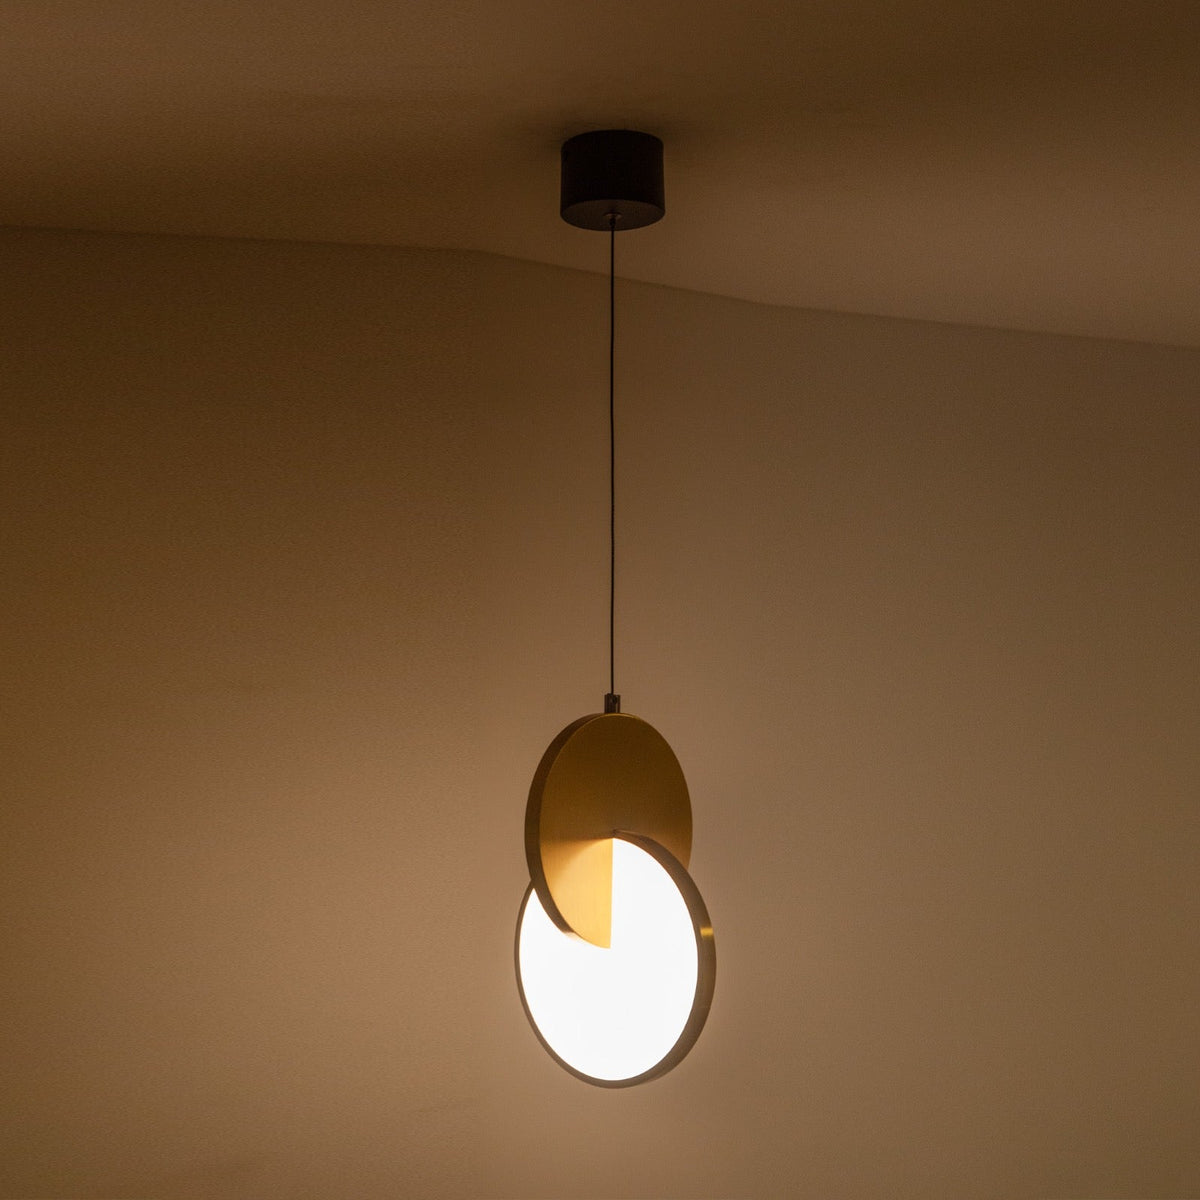 Buy Oblivion Medium LED Pendant Light Home